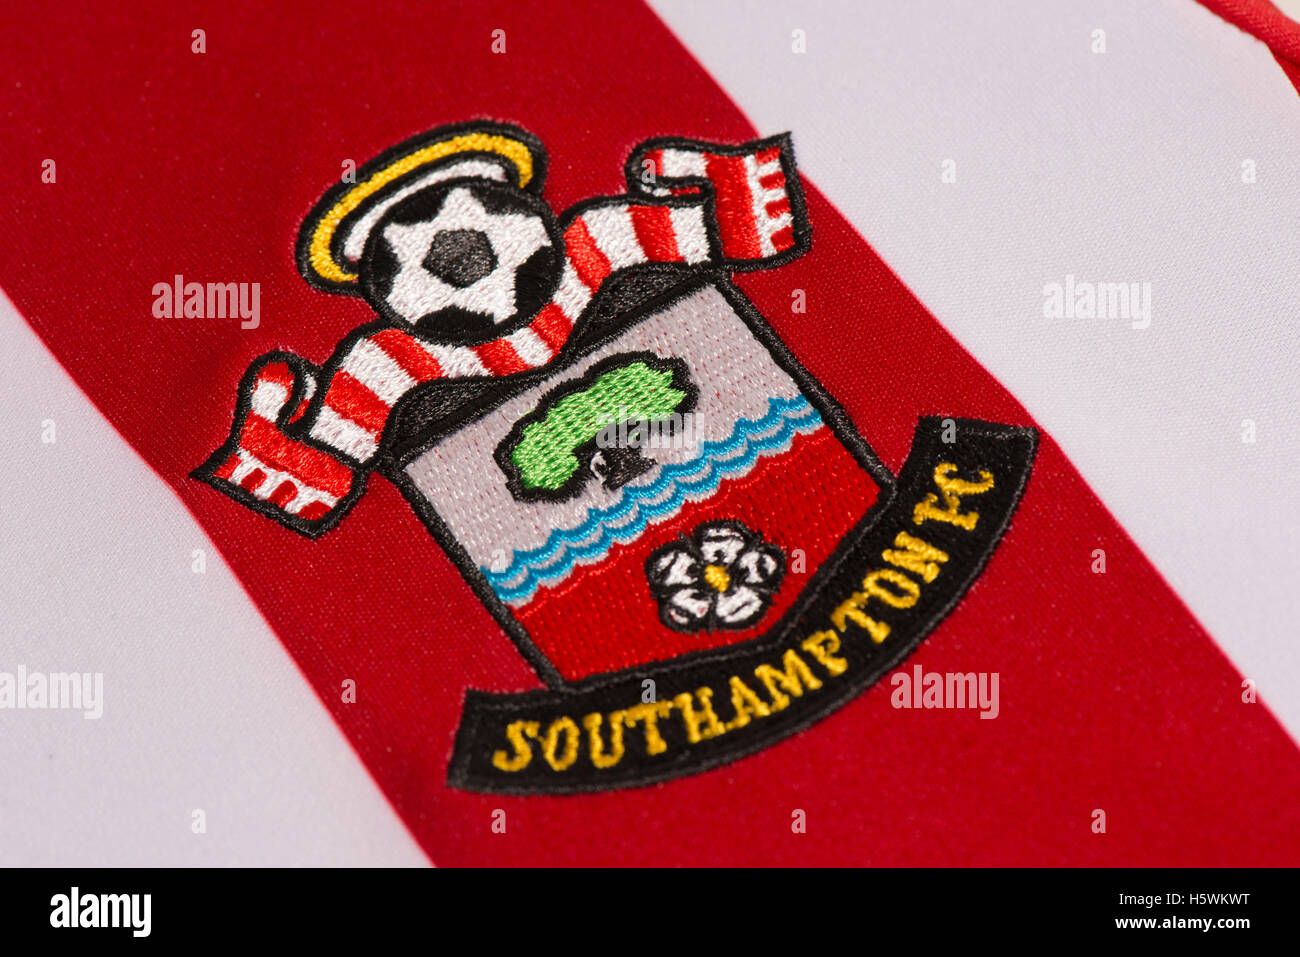 Premier League Southampton Football Club Badge Stock Photo Alamy